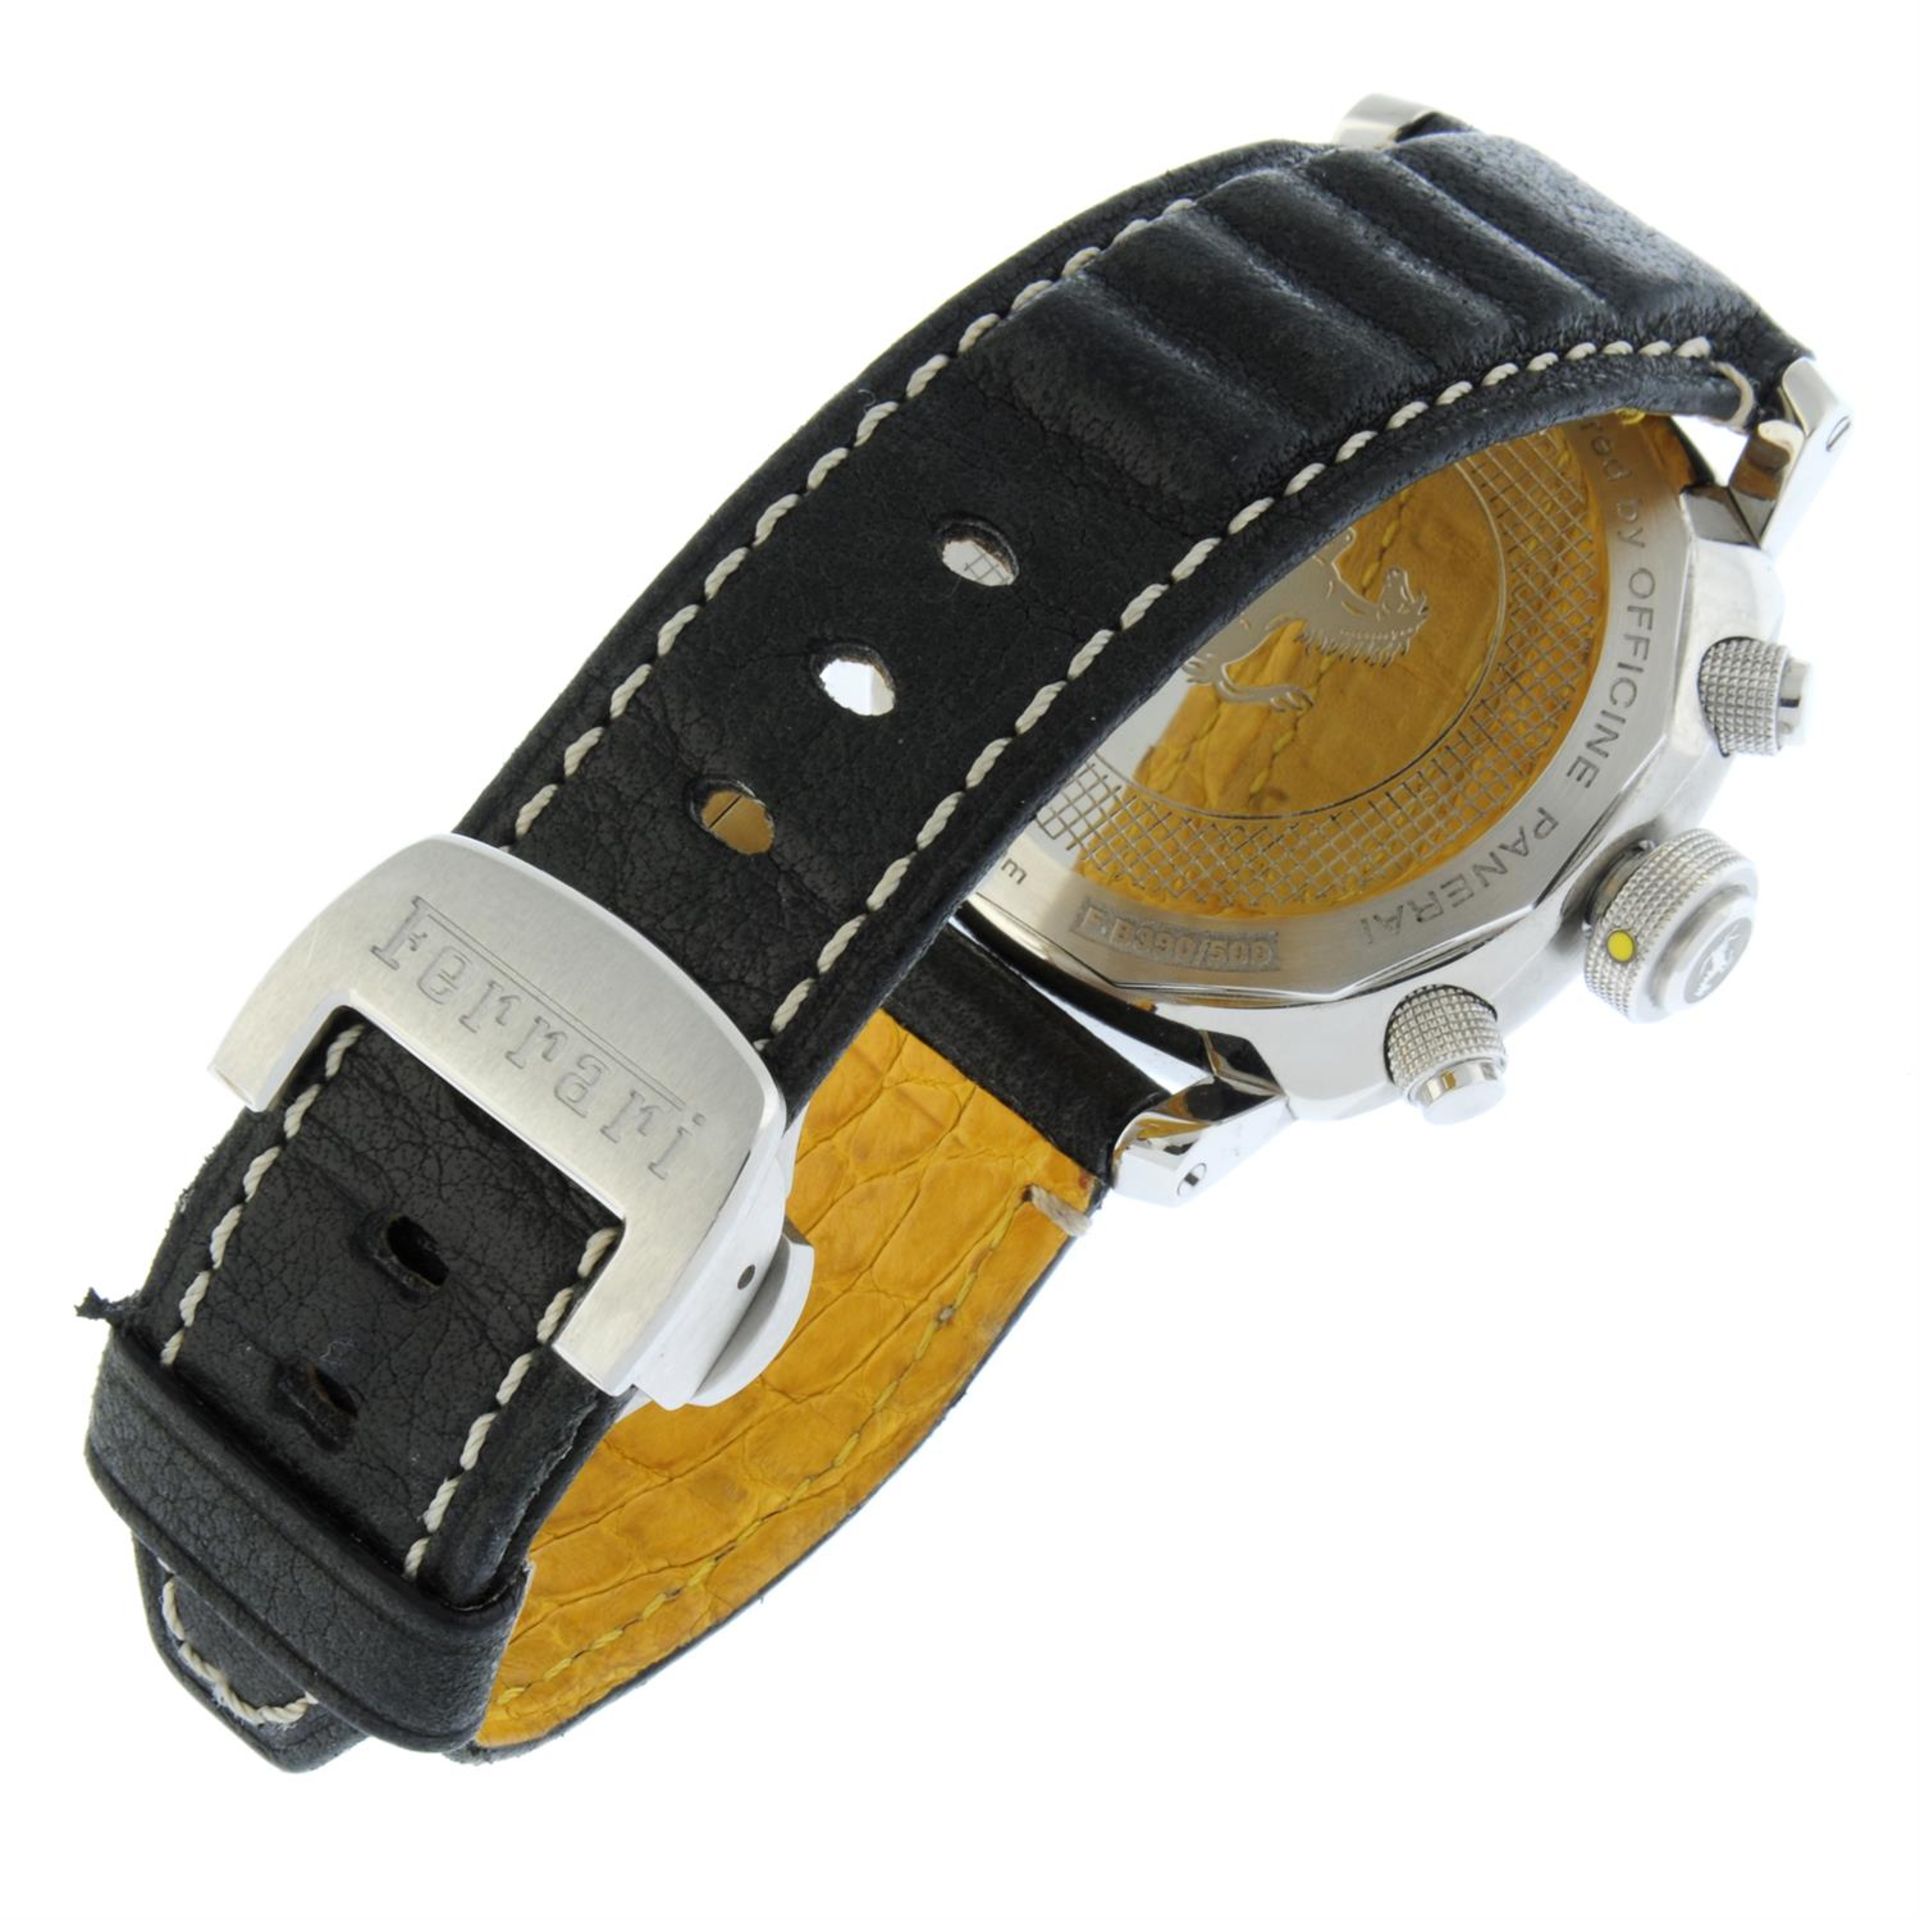 Panerai - a Ferrari Granturismo watch, 40mm. - Image 2 of 4